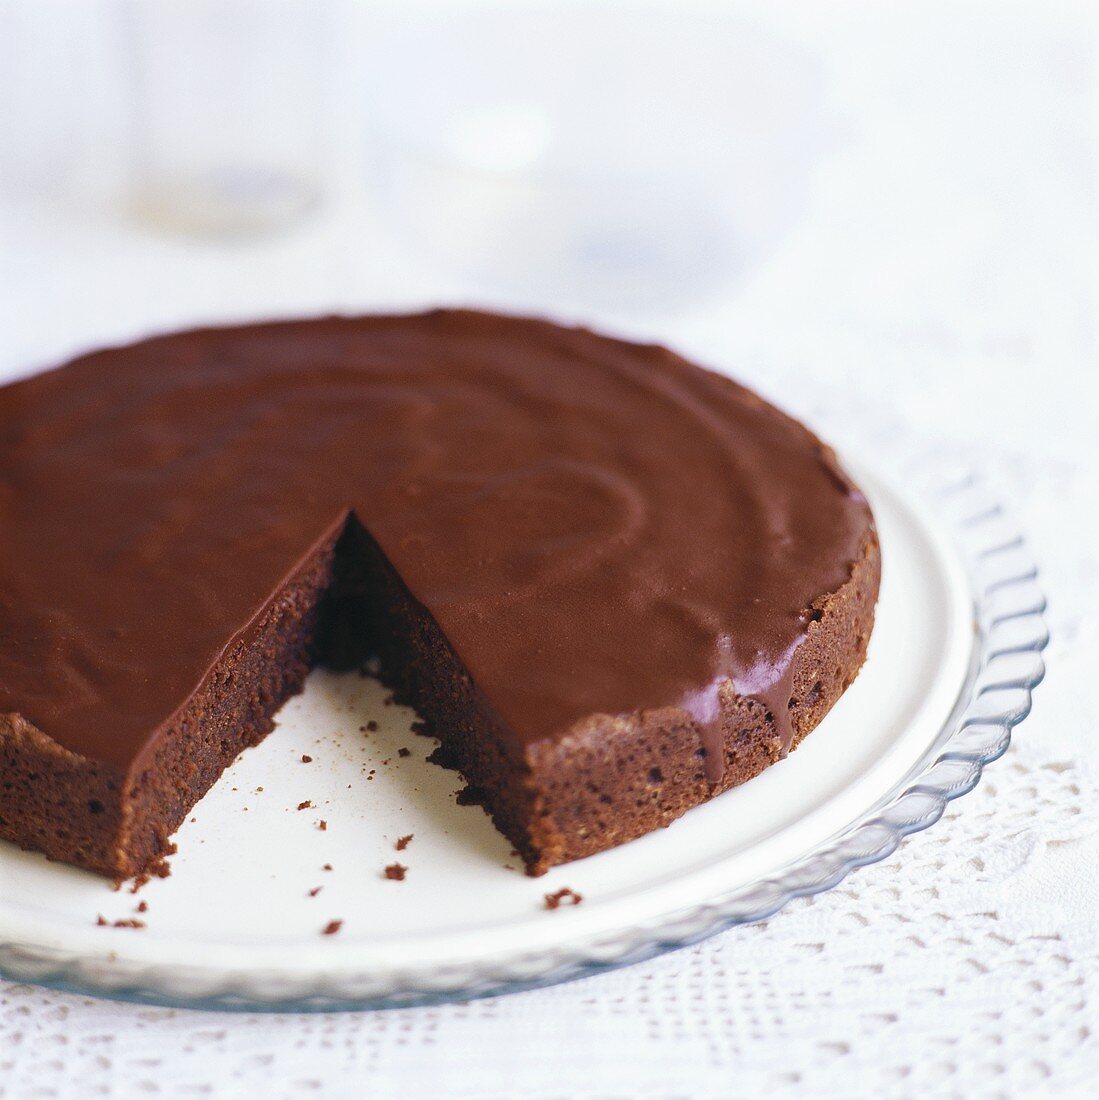 Chocolate almond cake, a piece taken